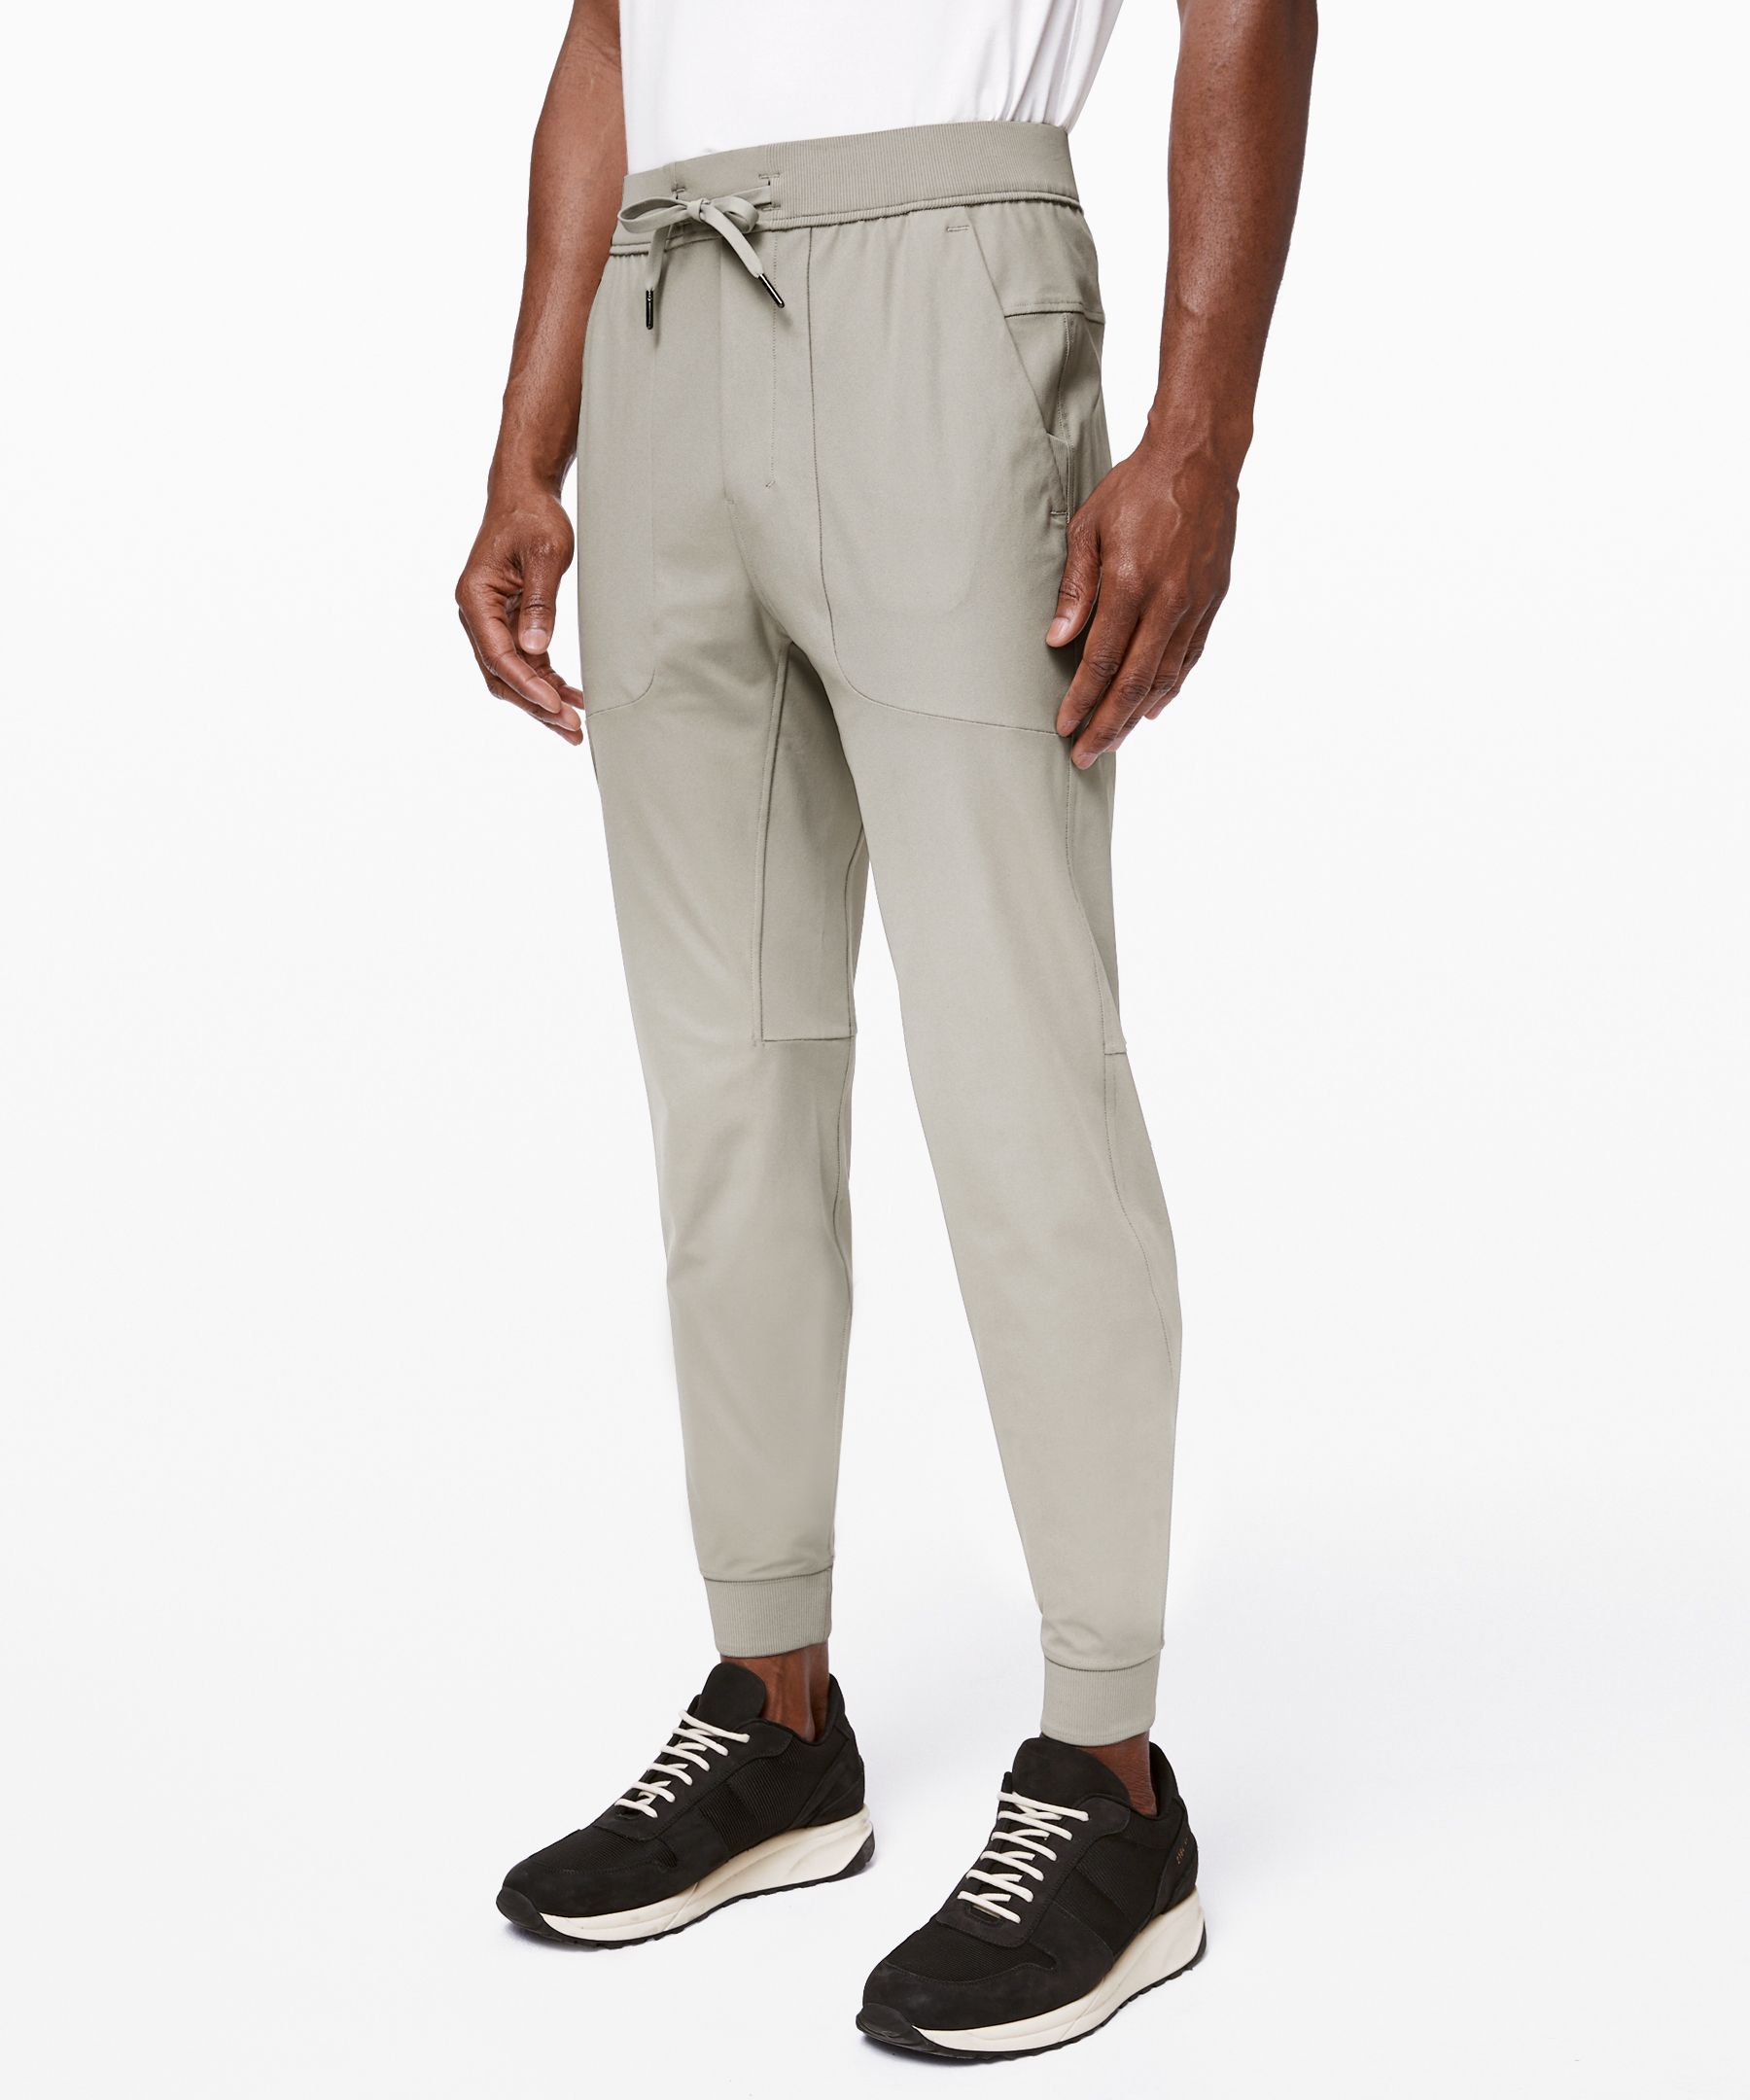 Lululemon ABC Joggers Shorter Length Warpstreme - ShopStyle Activewear Pants